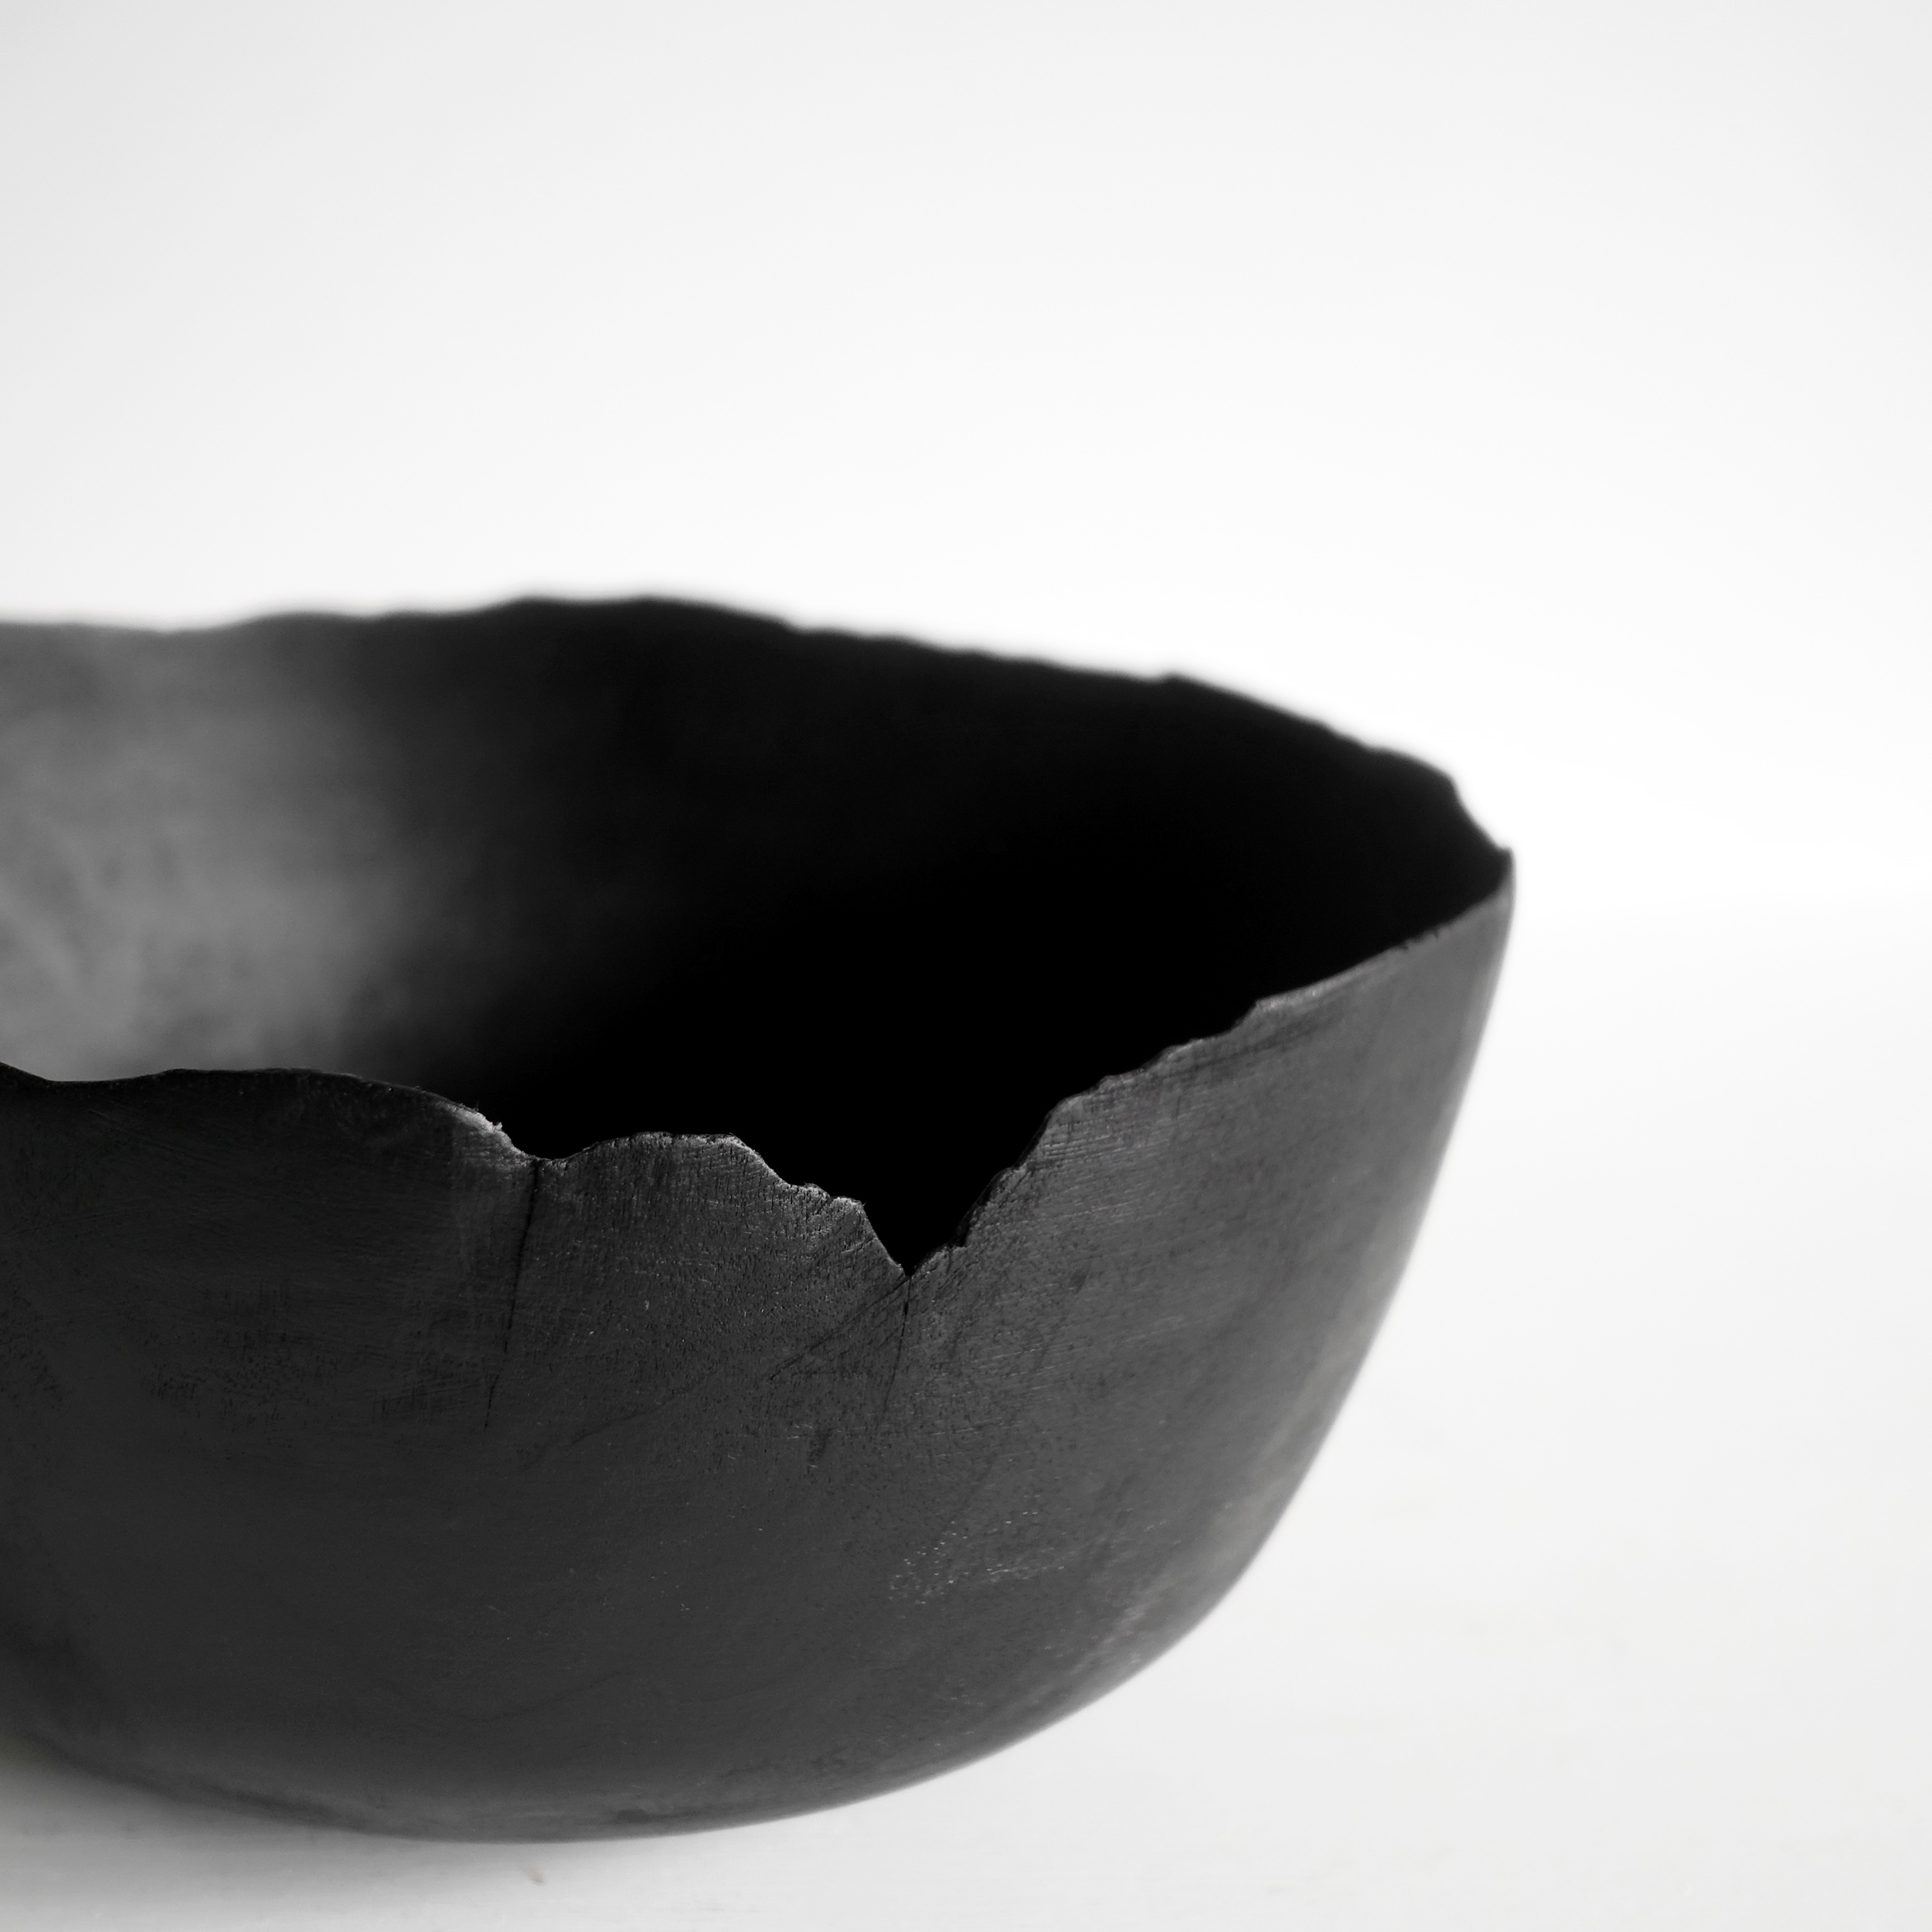 Thin black bowl / Bol fin noirci